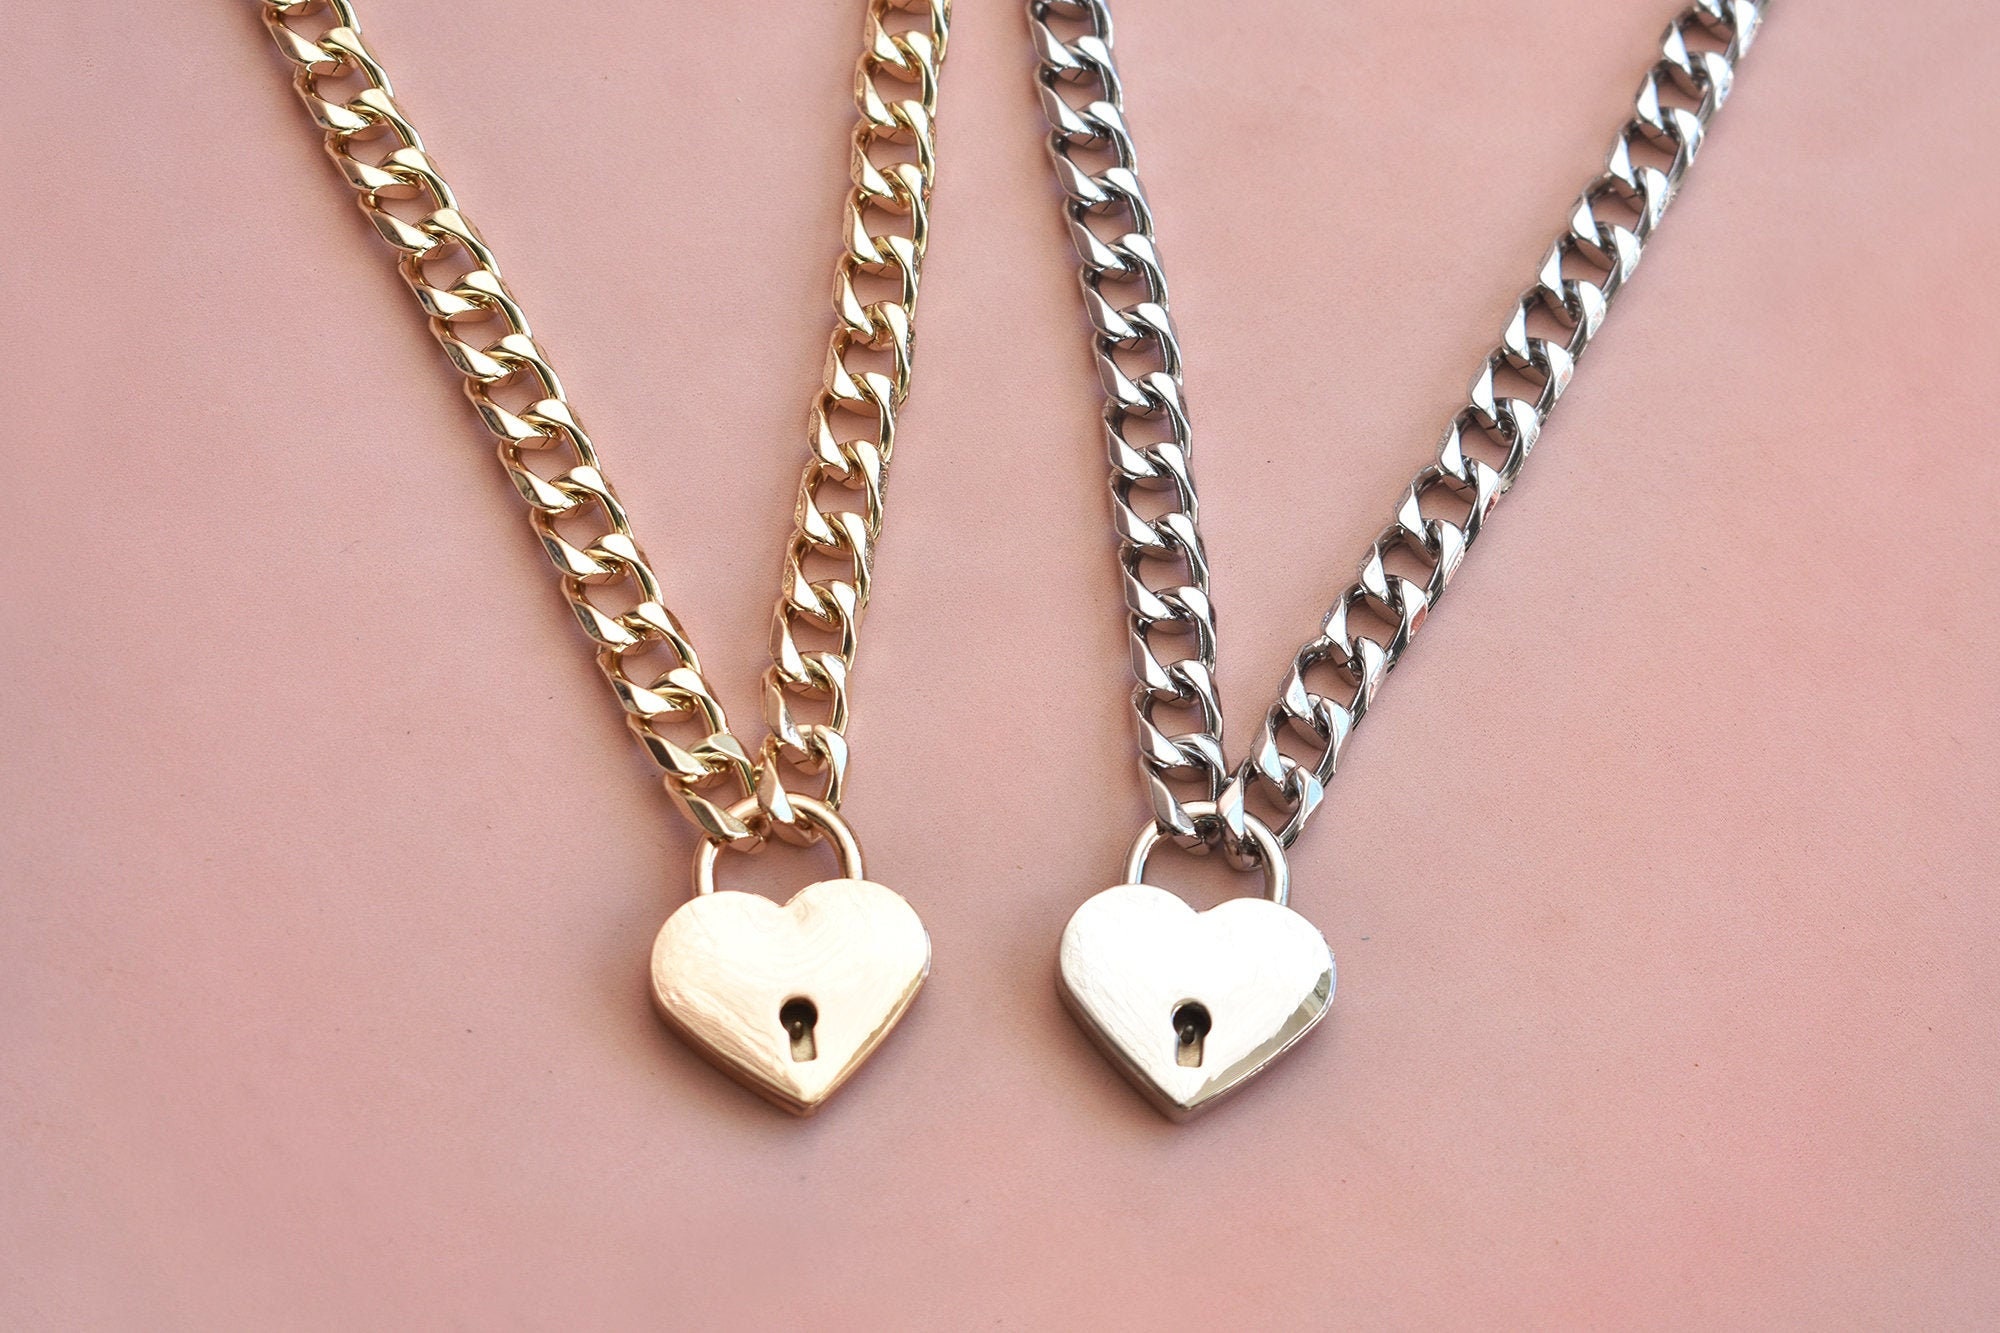 HZMAN Lover Heart Padlock Necklace